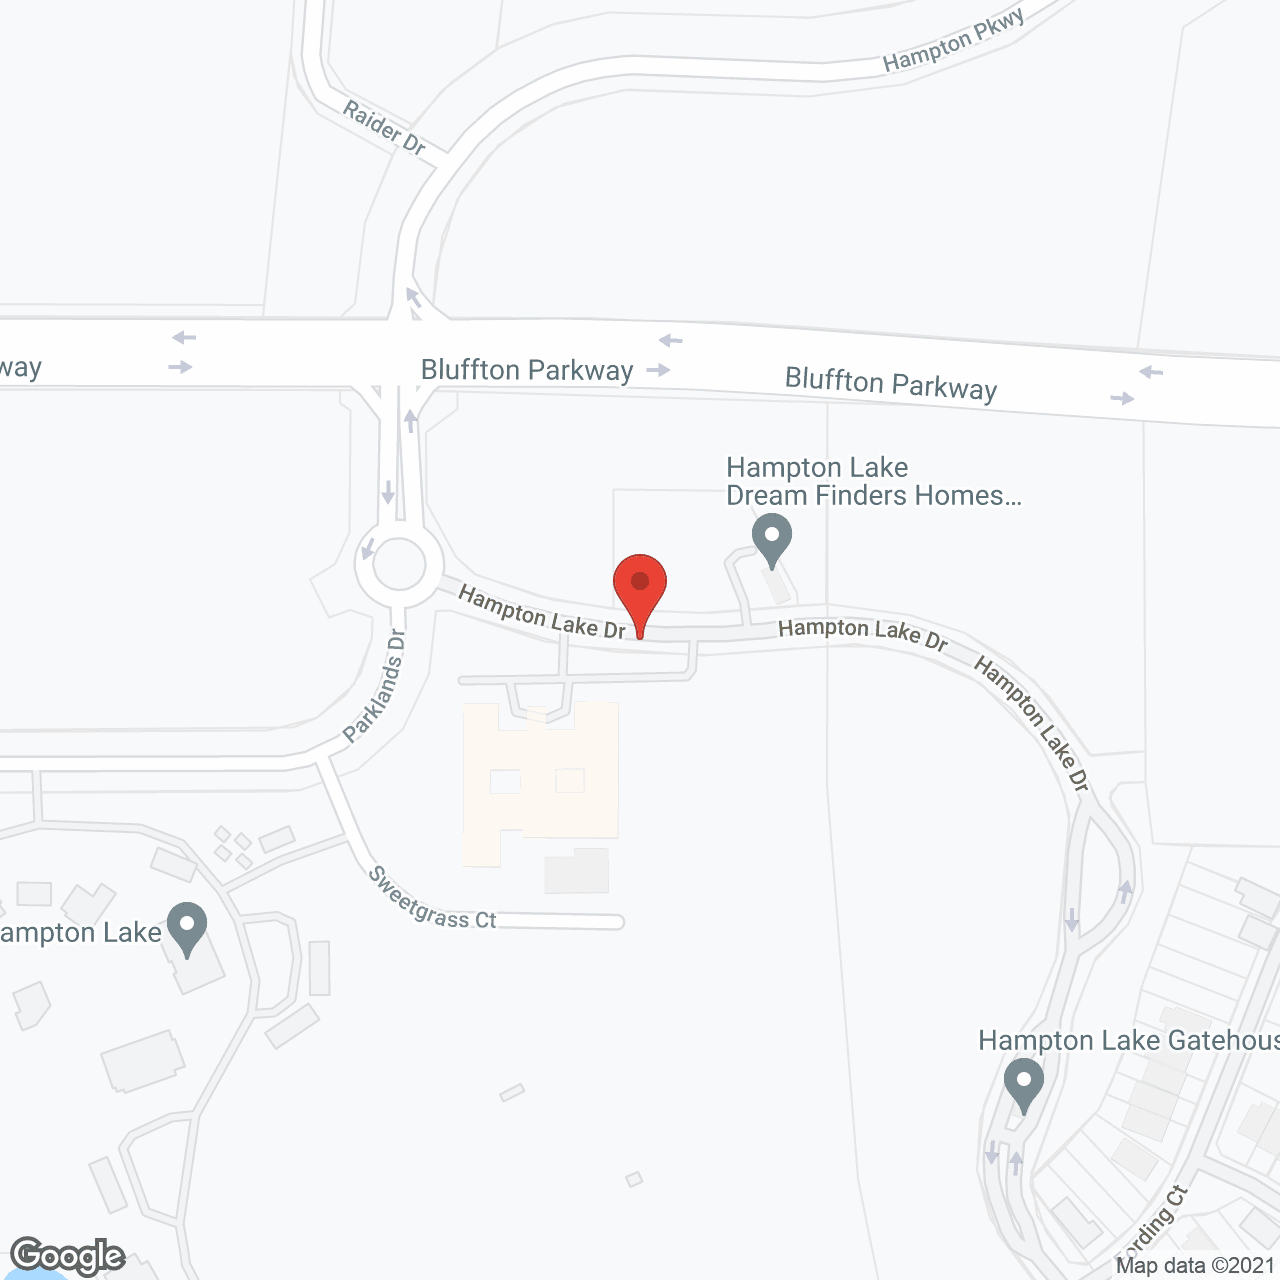 Benton House of Bluffton in google map